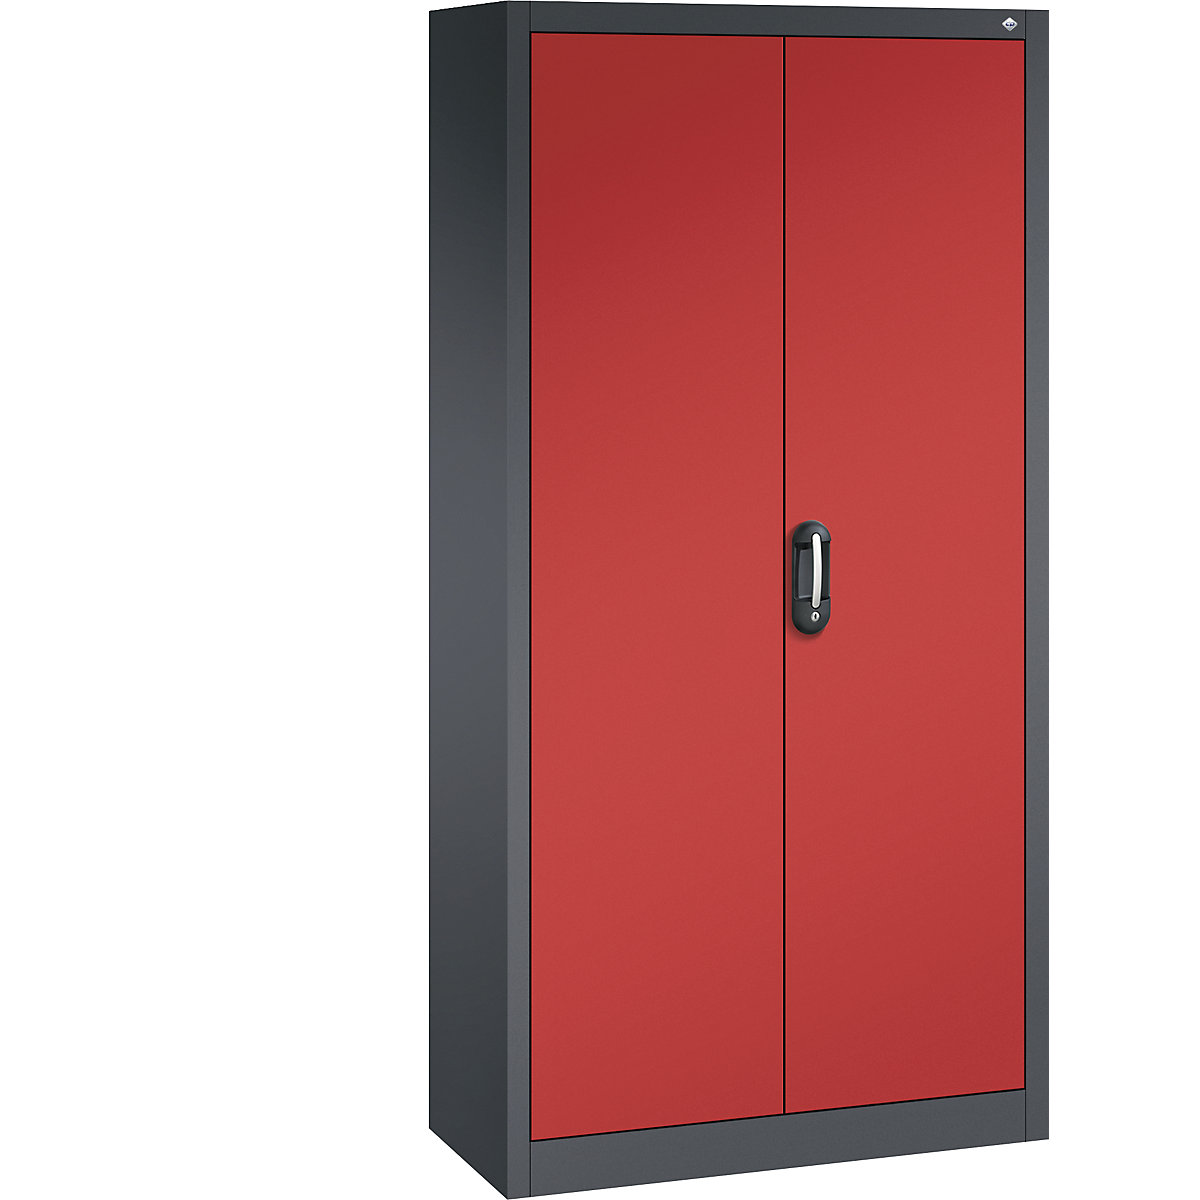 Univerzální skříň ACURADO – C+P, š x h 930 x 400 mm, černošedá / ohnivě červená-26